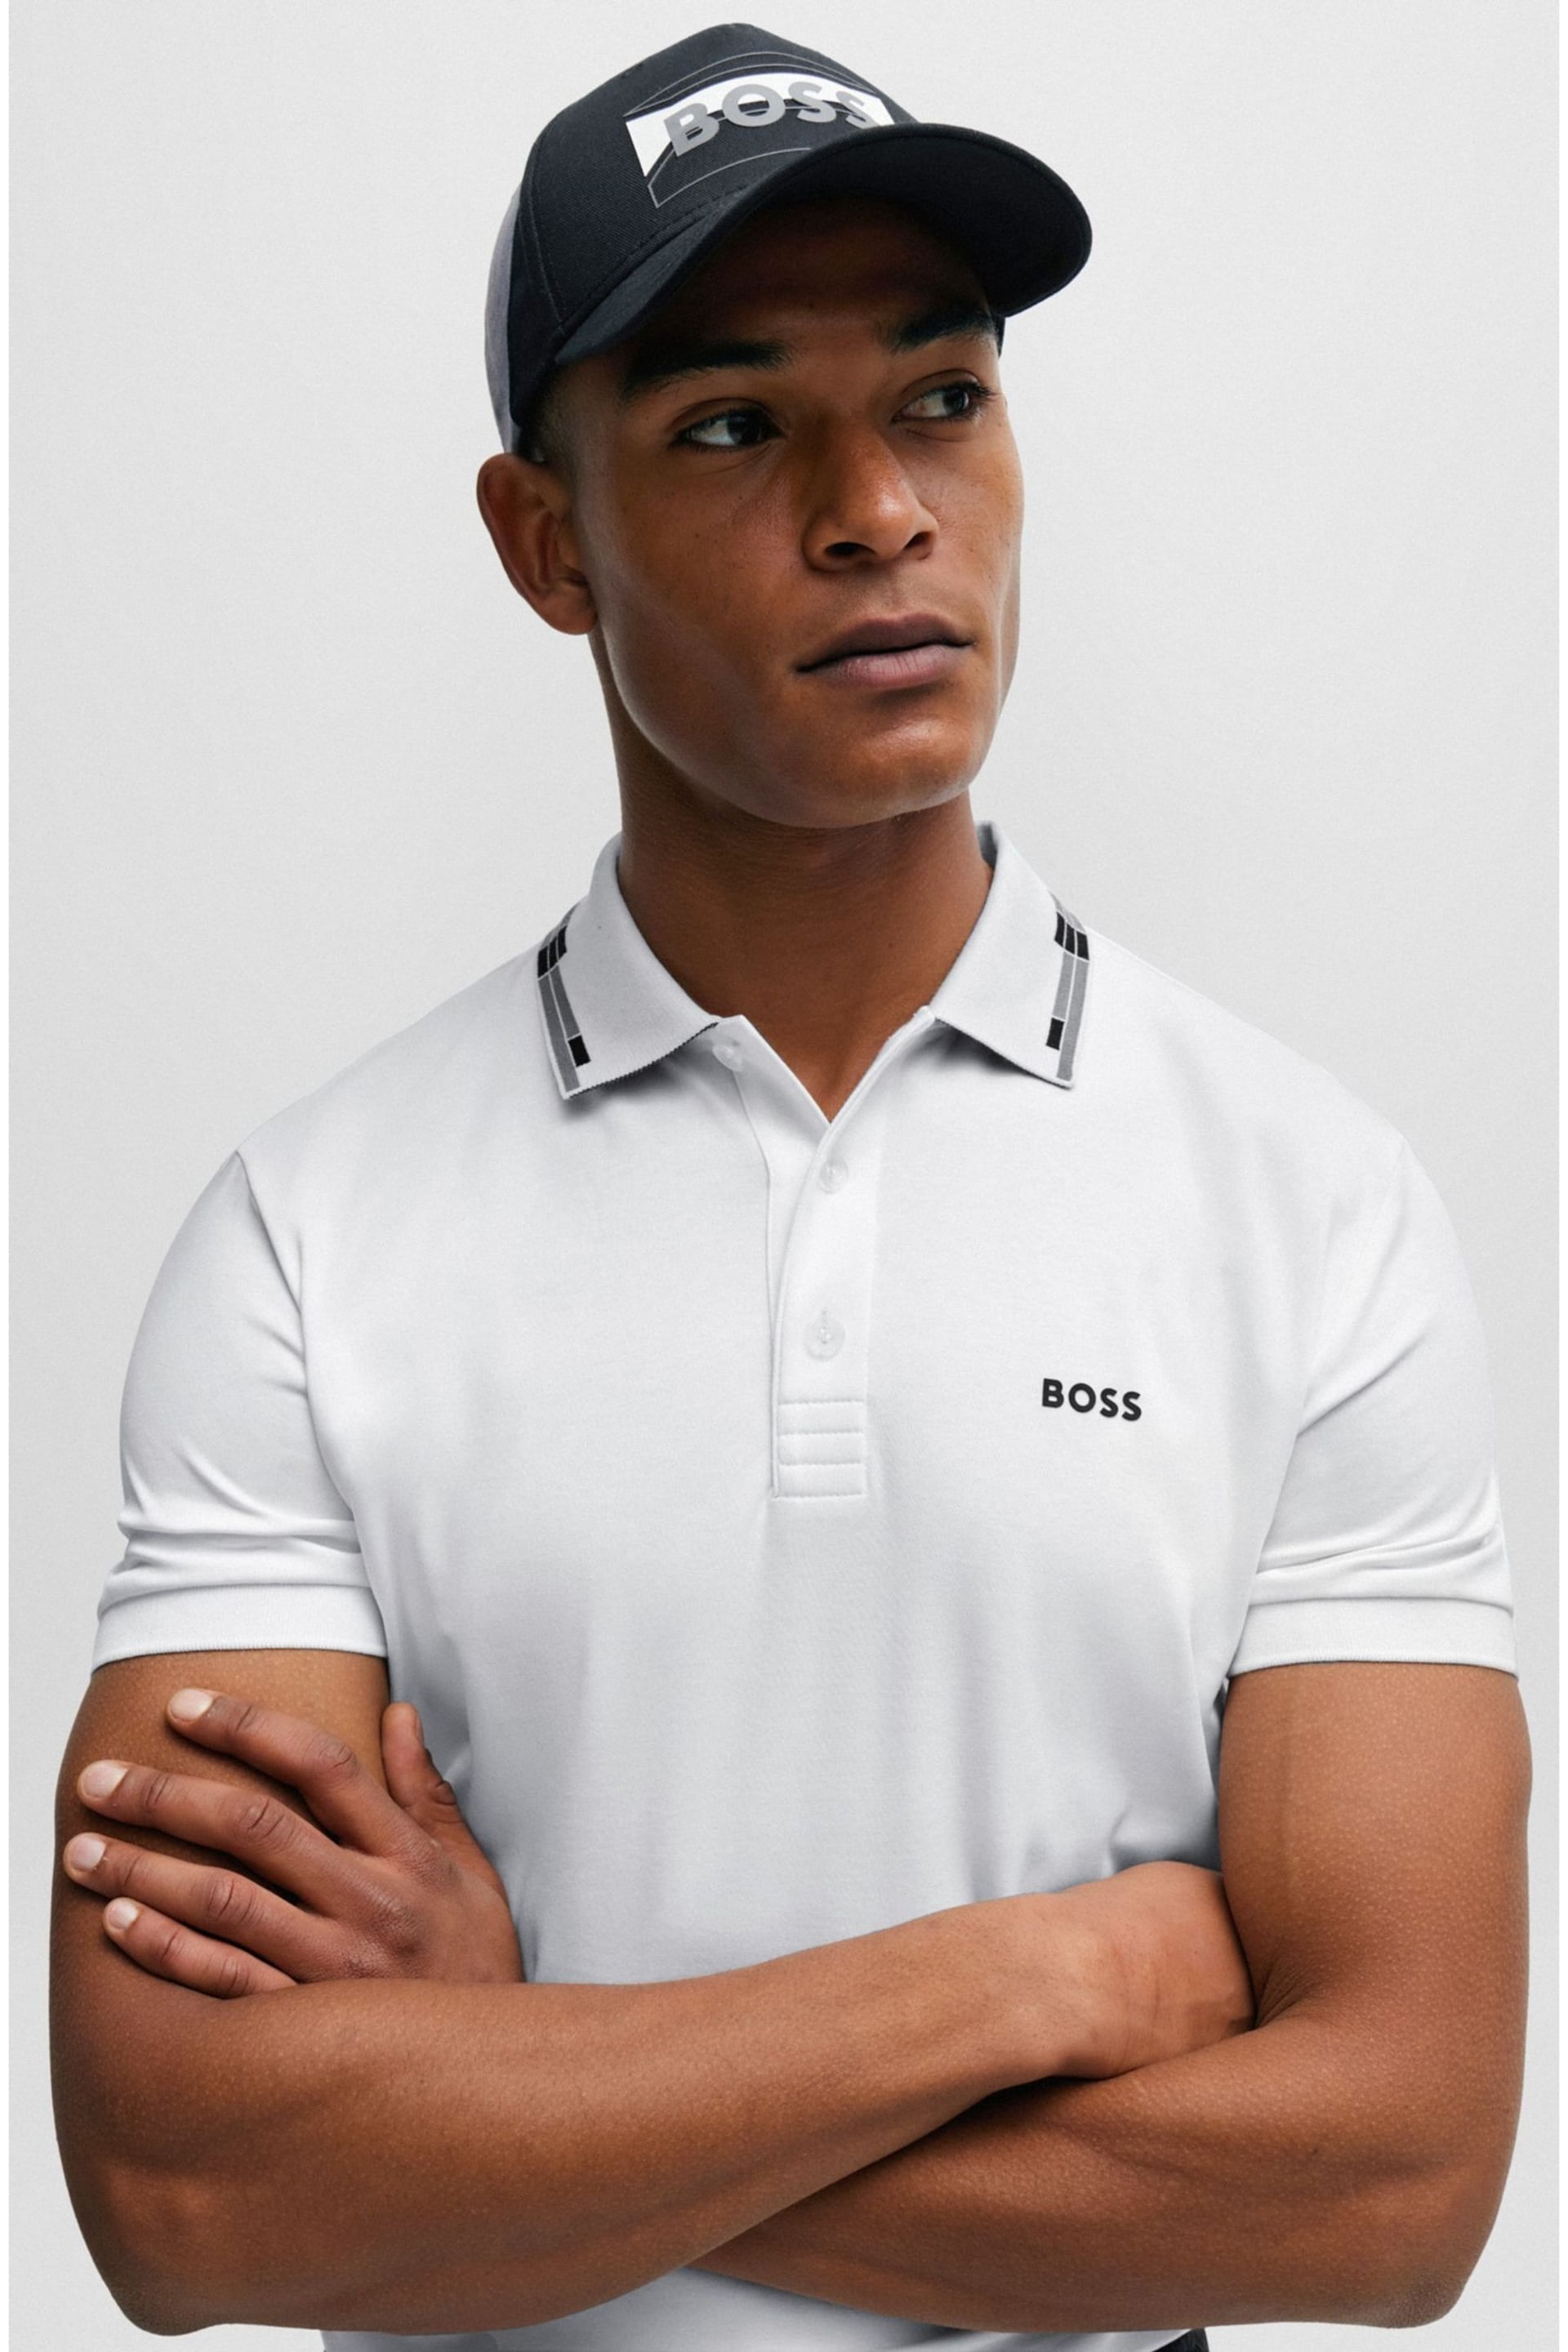 BOSS White Interlock Slim Fit Sporty Polo Shirt - Image 1 of 1